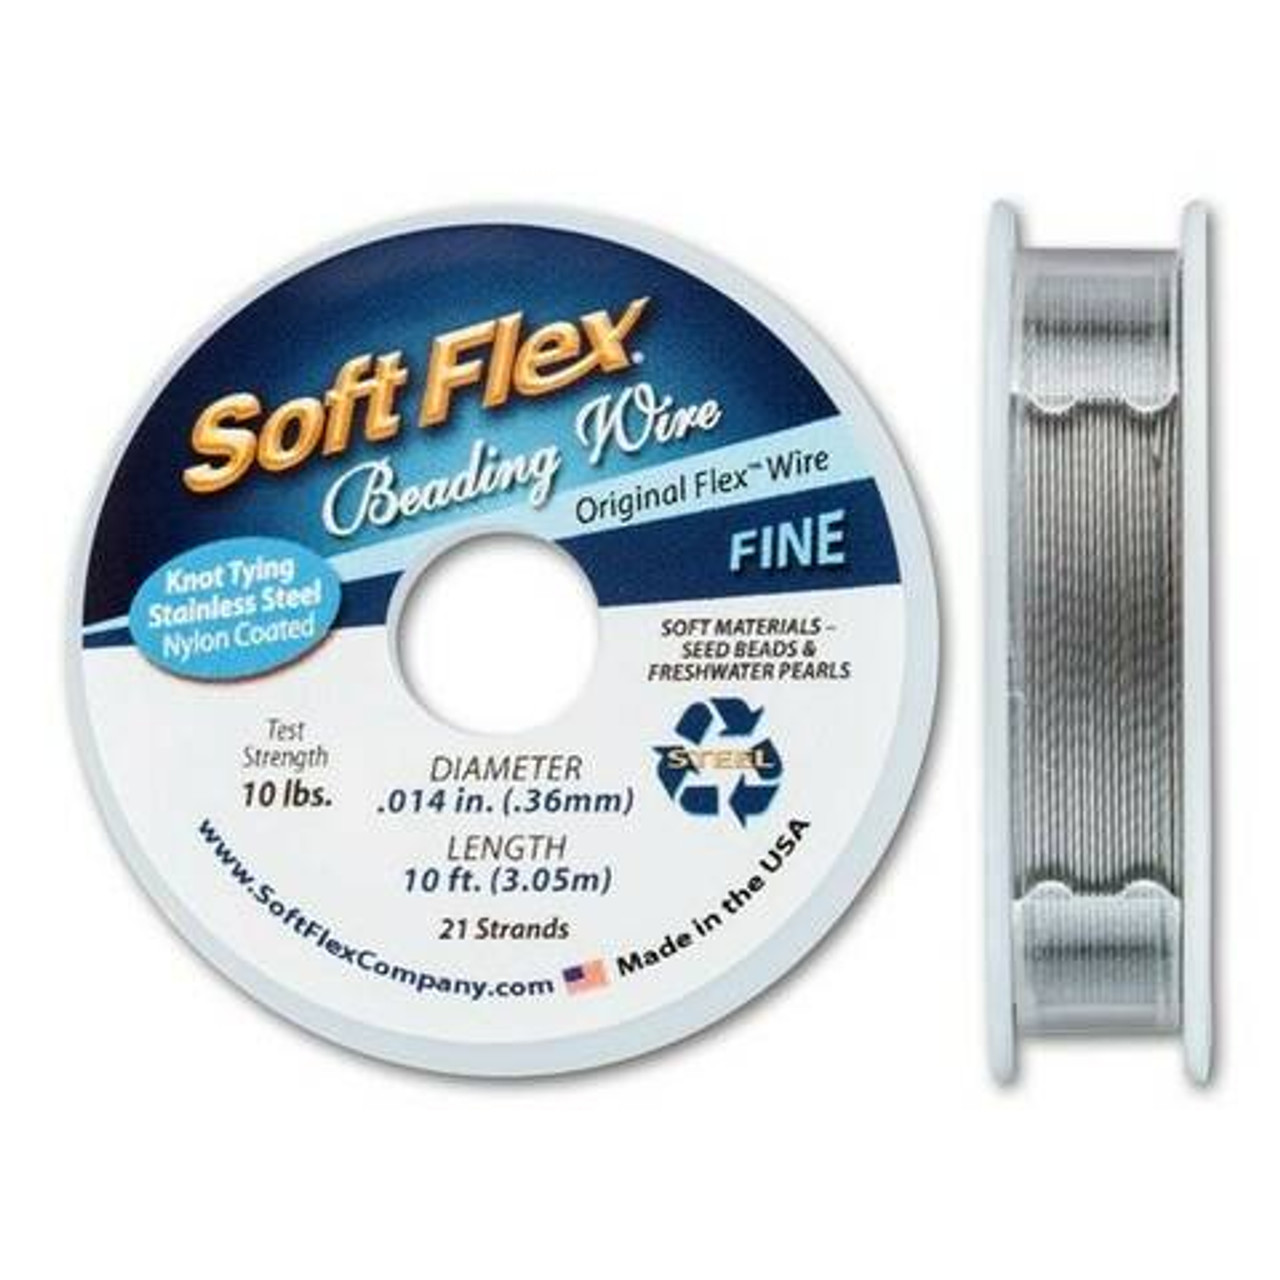 Soft Flex Satin Silver FINE Beading Wire